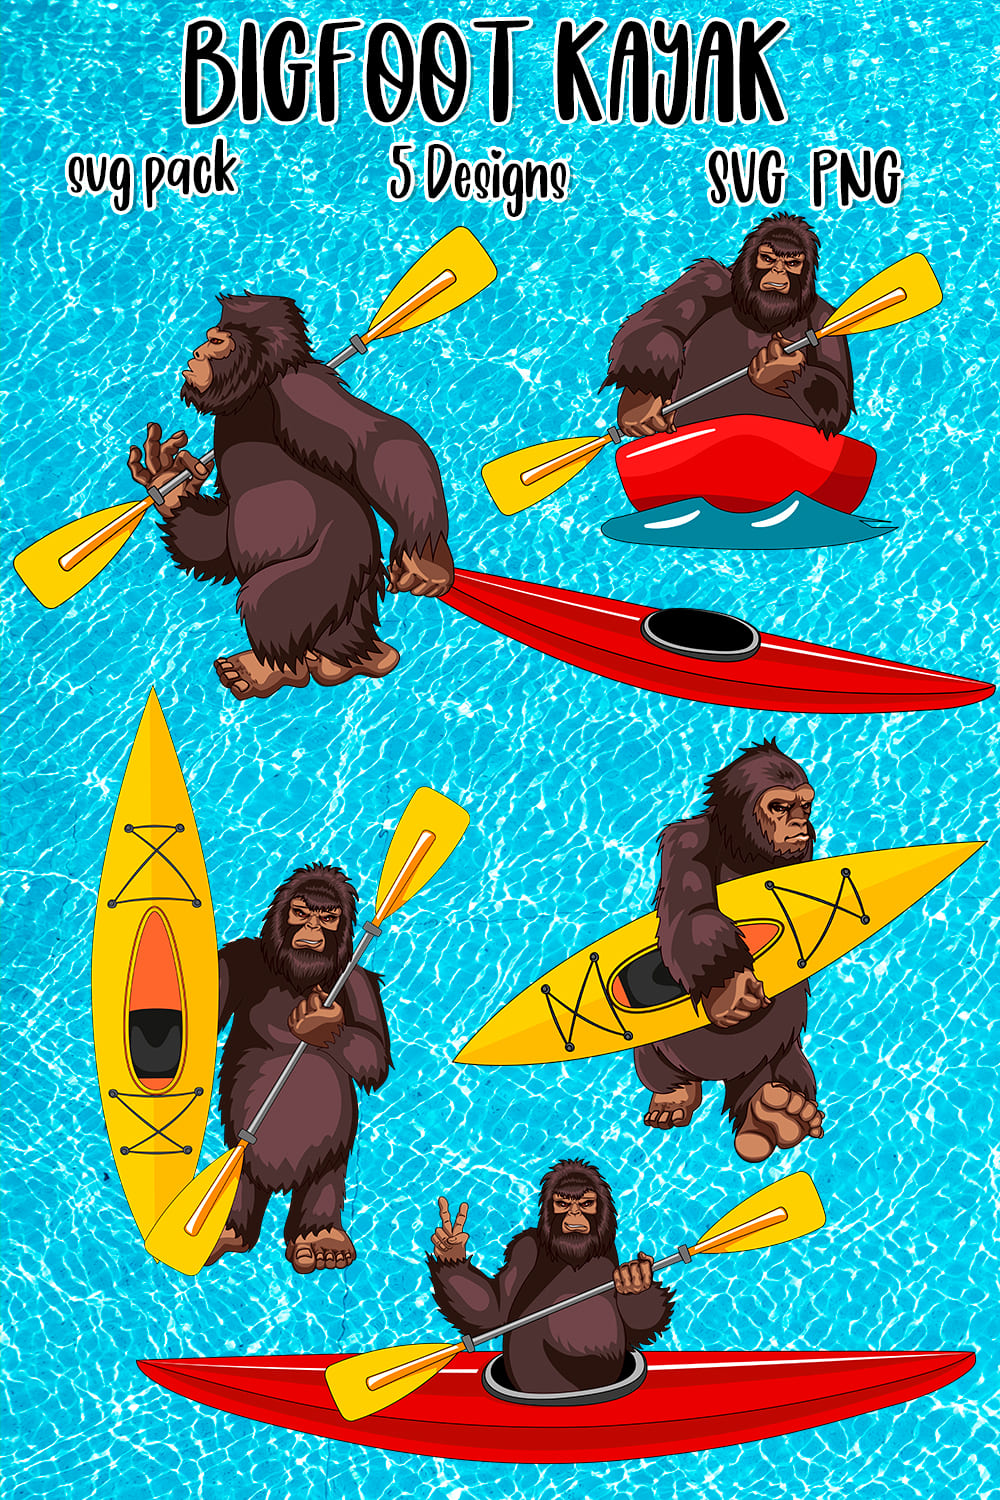 Bigfoot Kayak SVG pinterest image preview.